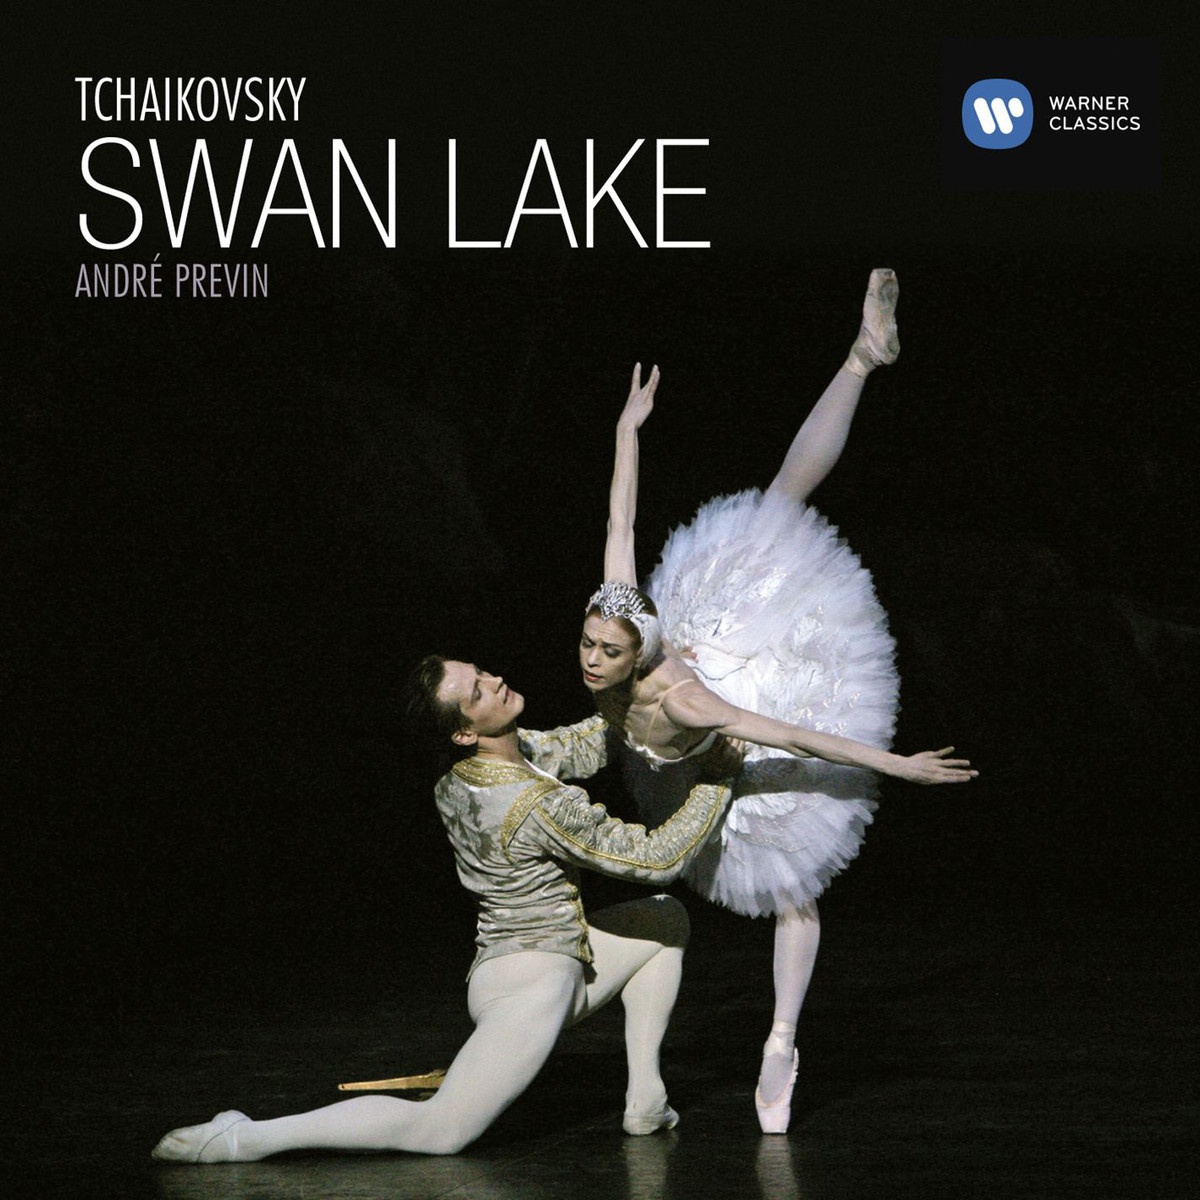 Swan Lake - Ballet in four acts Op. 20, Act III: 22. Neapolitan Dance (Allegro moderato - Andantino quasi moderato)